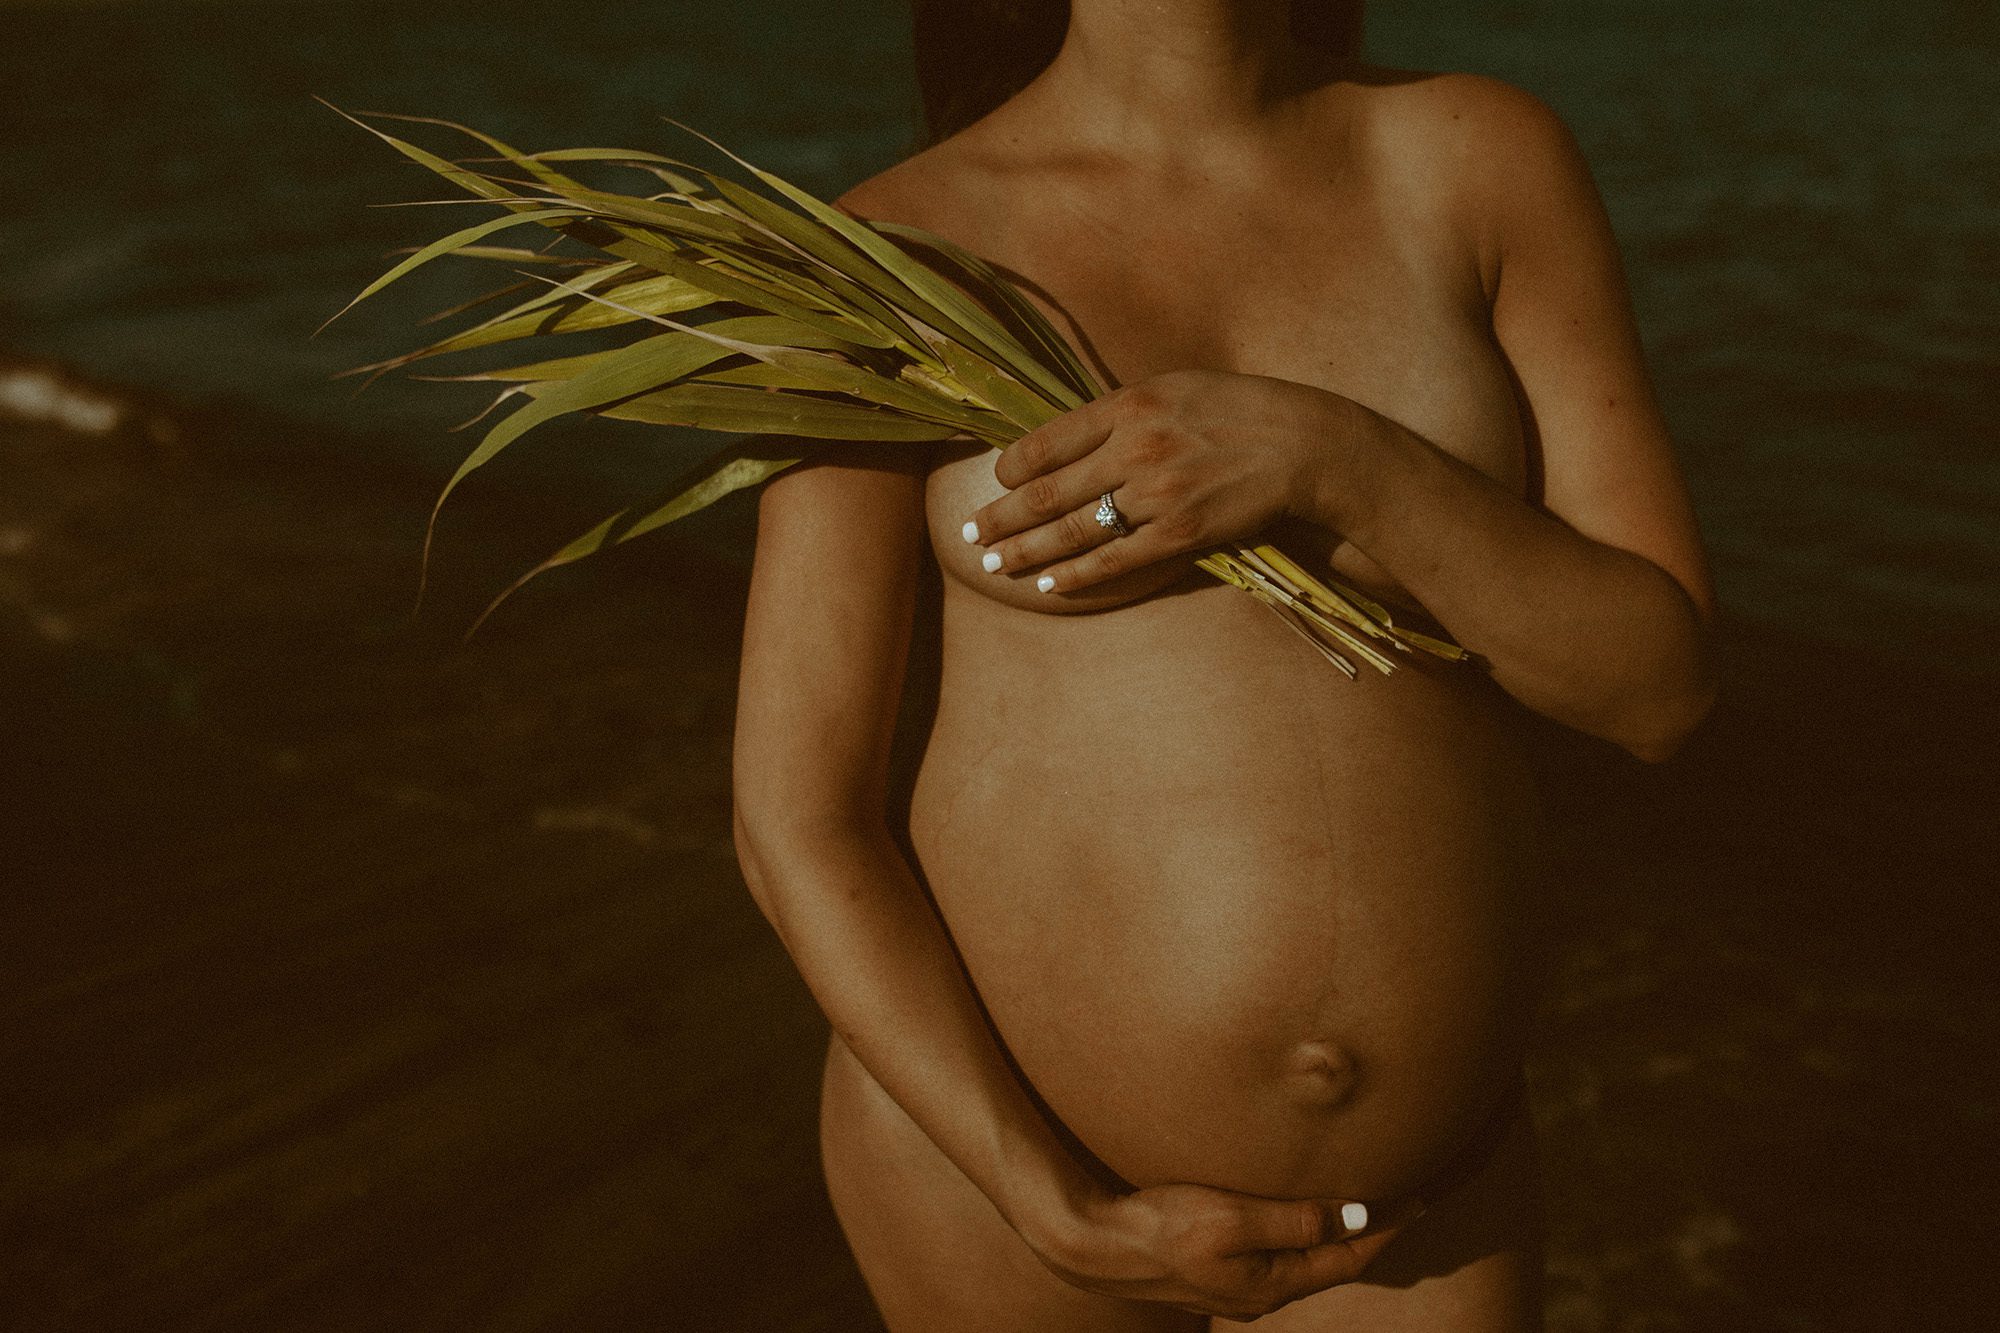 Pregnant woman desert maternity bump photos